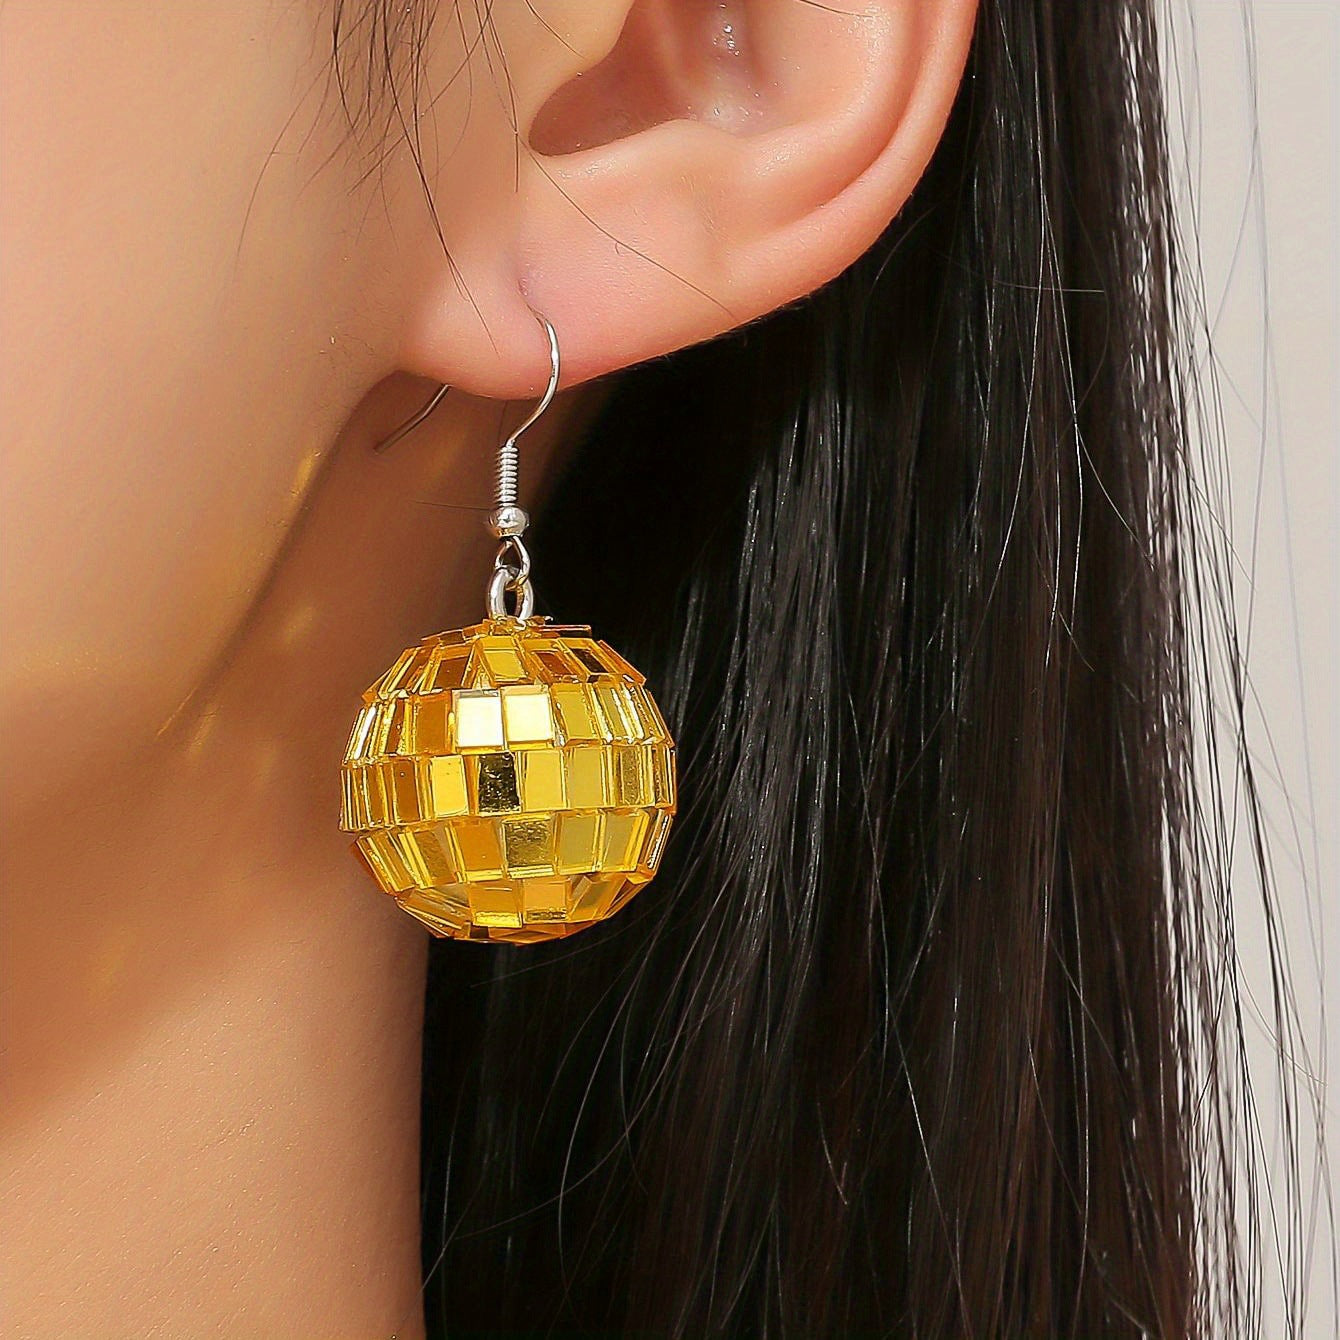 gold mirror ball earrings, taylor swift style